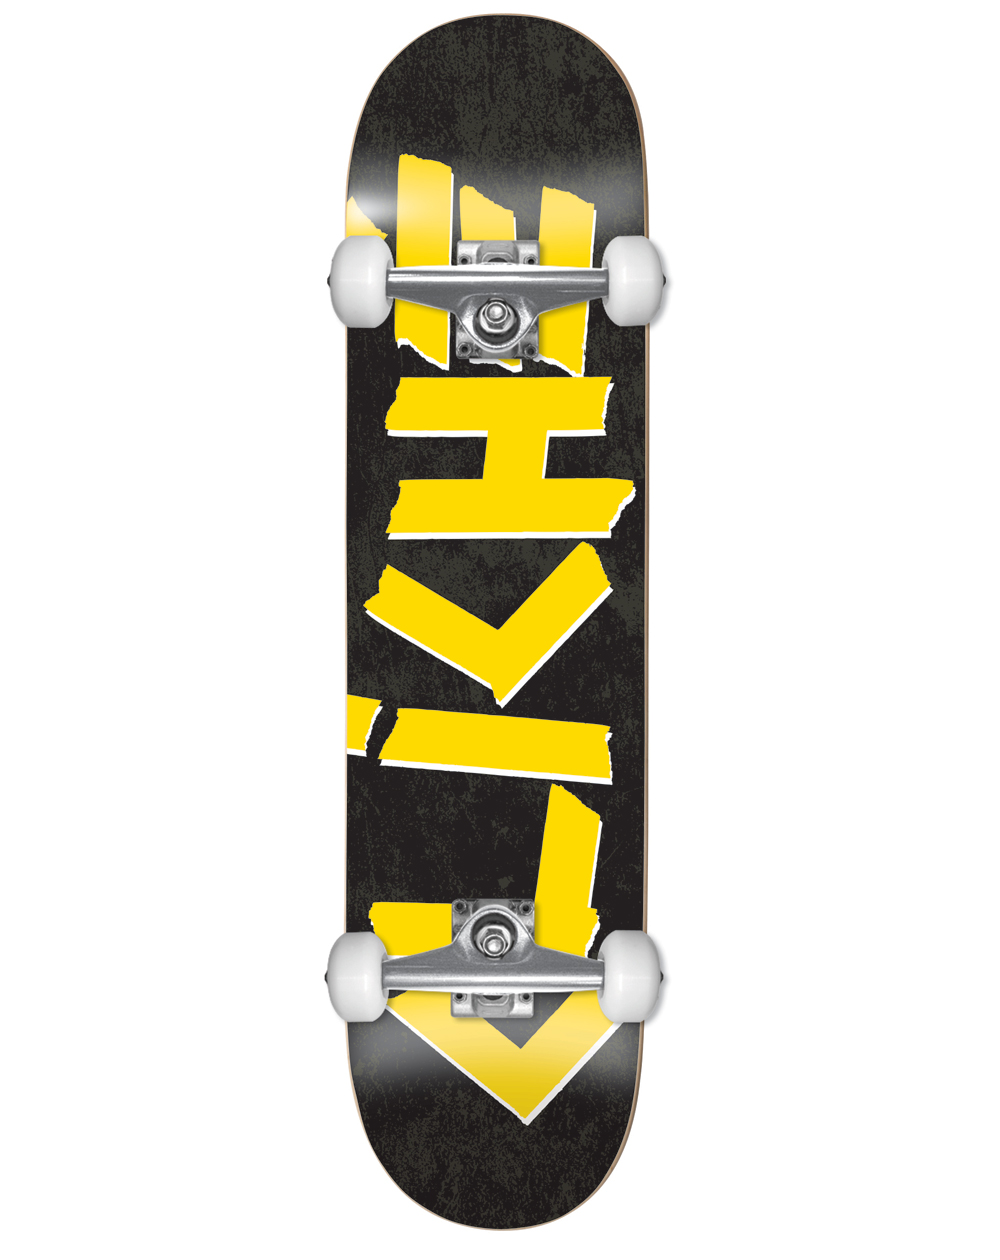 Cliché Scotch 7.875" Complete Skateboard Black/Yellow